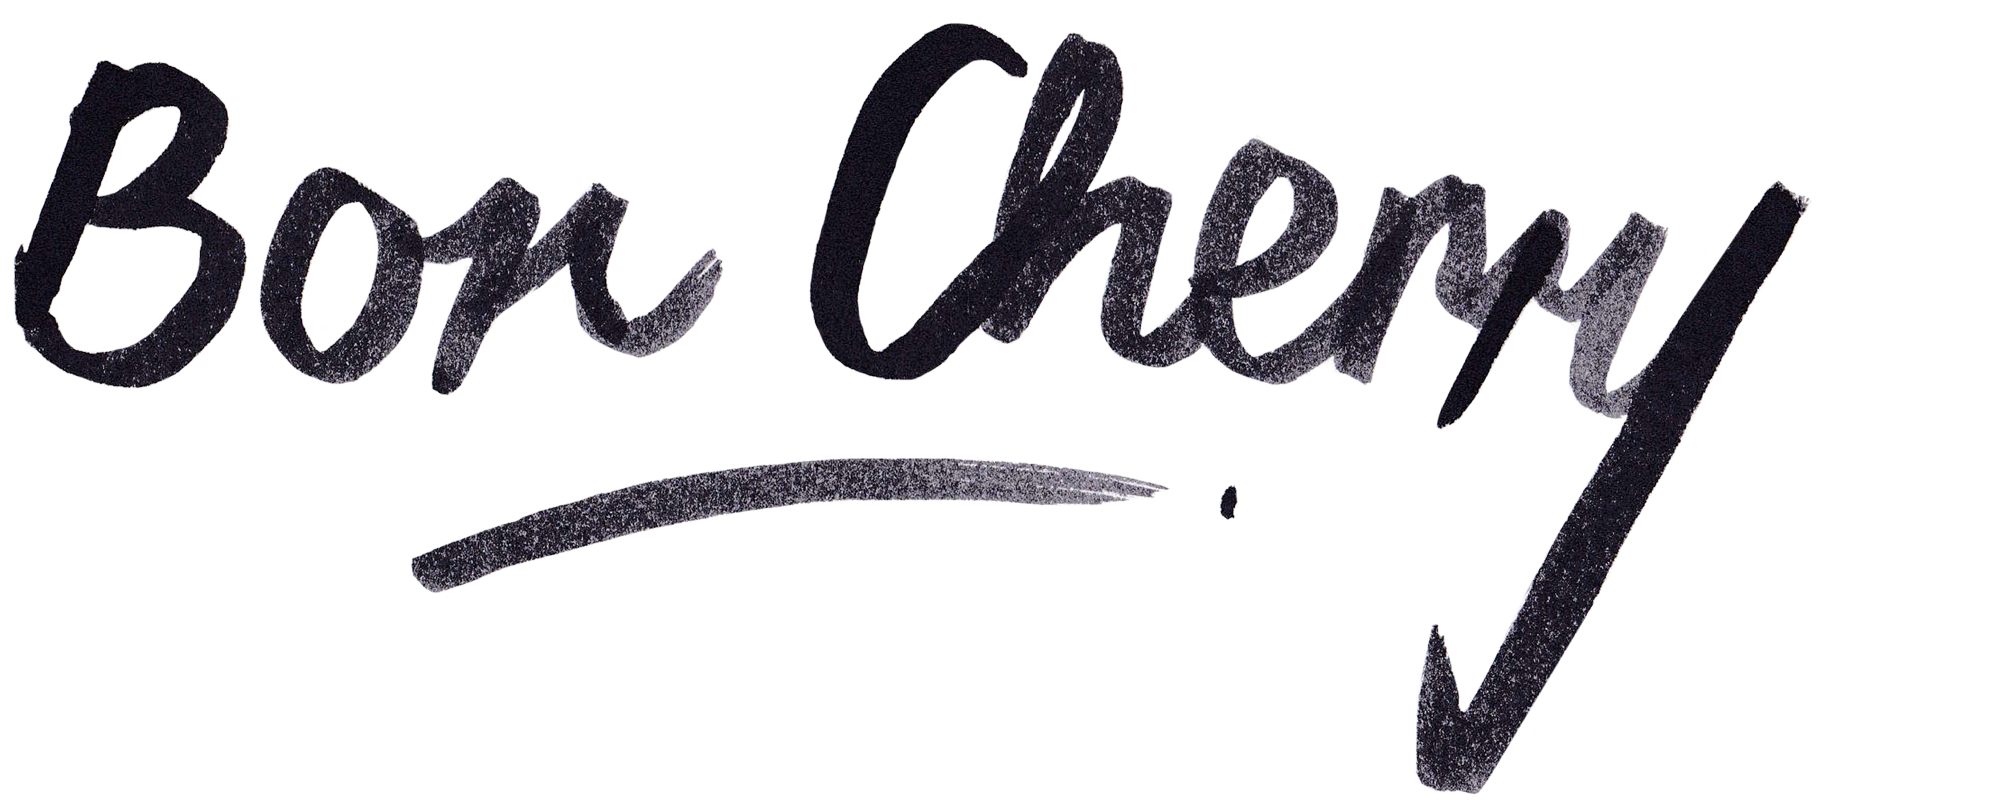 Logo in brush script saying Bon Cherry